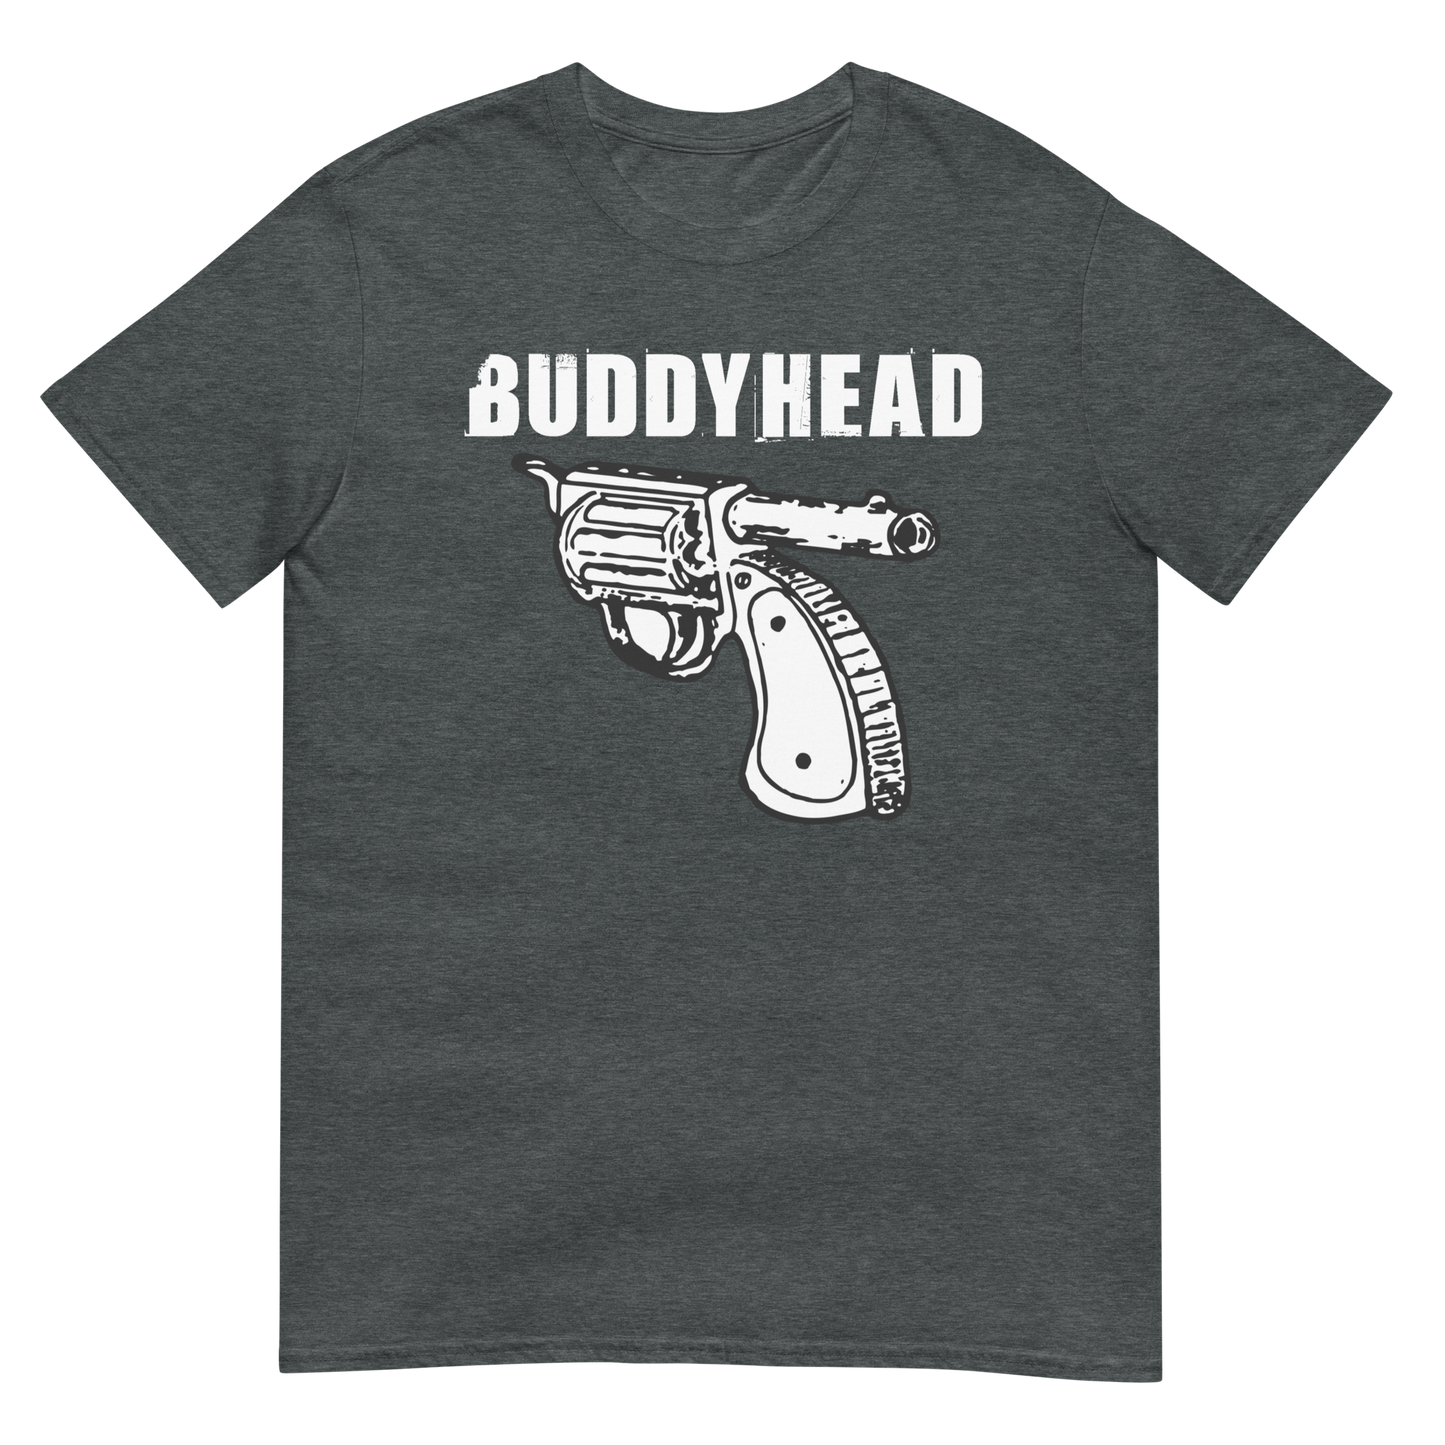 Buddyhead backwards gun tee (cheap)